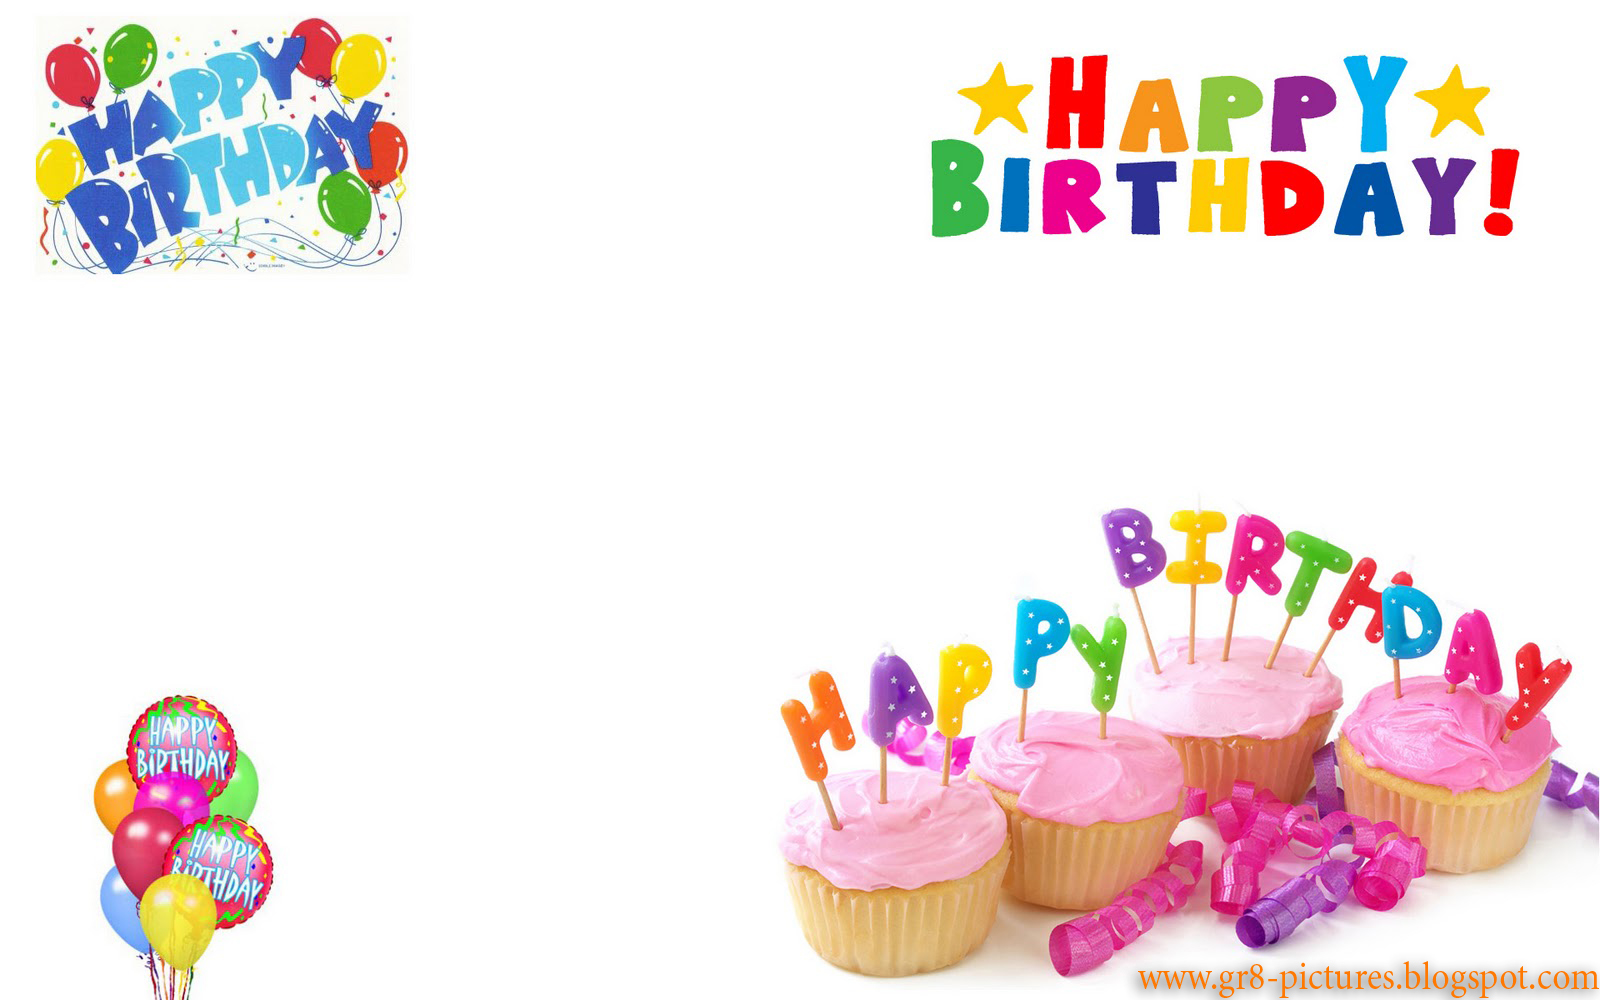 birthday balloons wallpaper,cake decorating supply,birthday party,baking cup,birthday,birthday candle